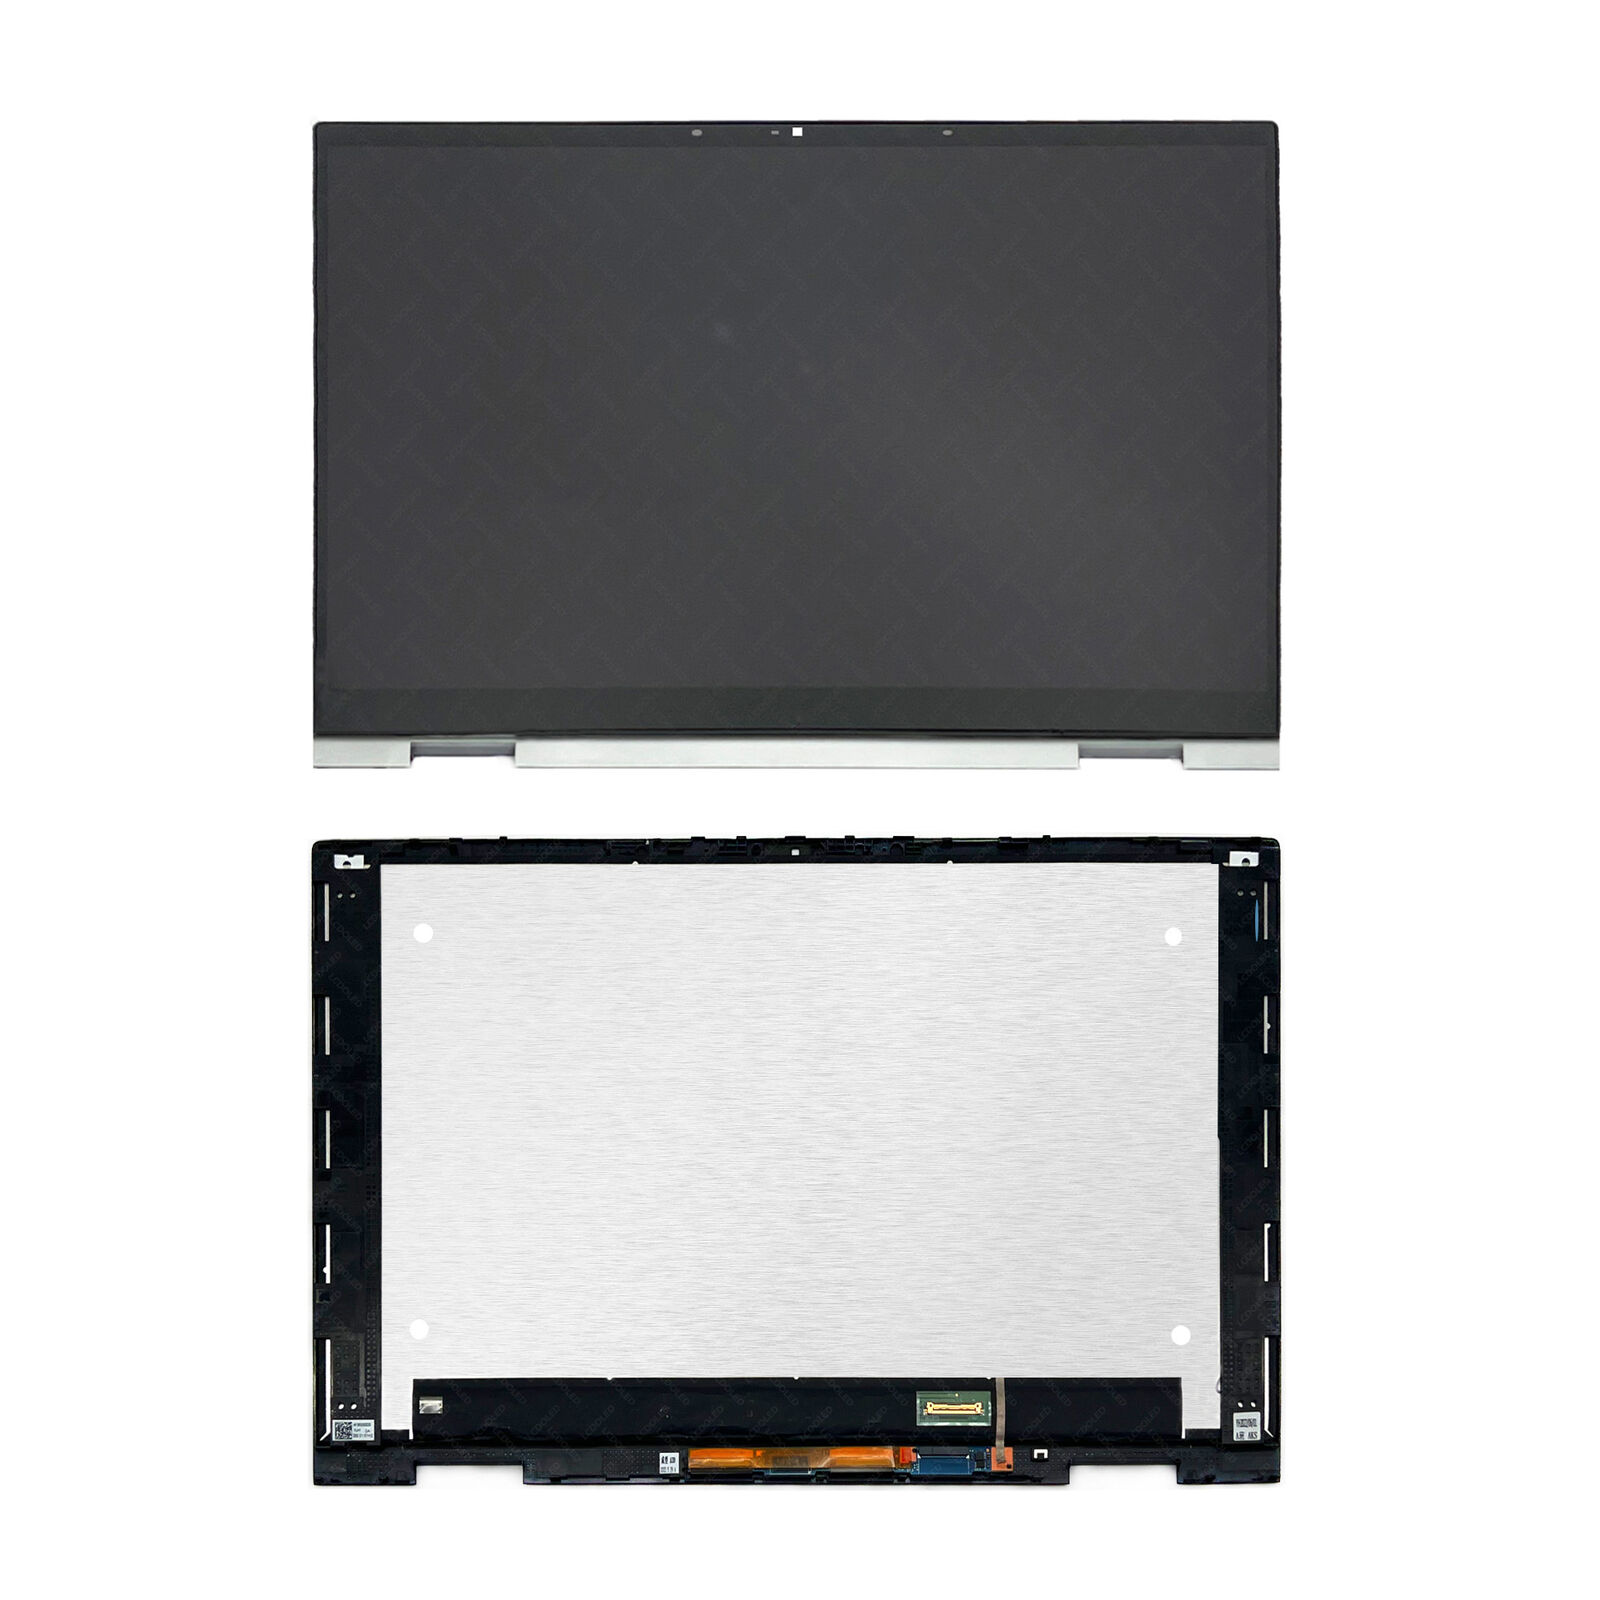 N10353-001 15.6'' LCD TouchScreen Digitizer +Bezel for HP ENVY x360 15-ew 15t-ew